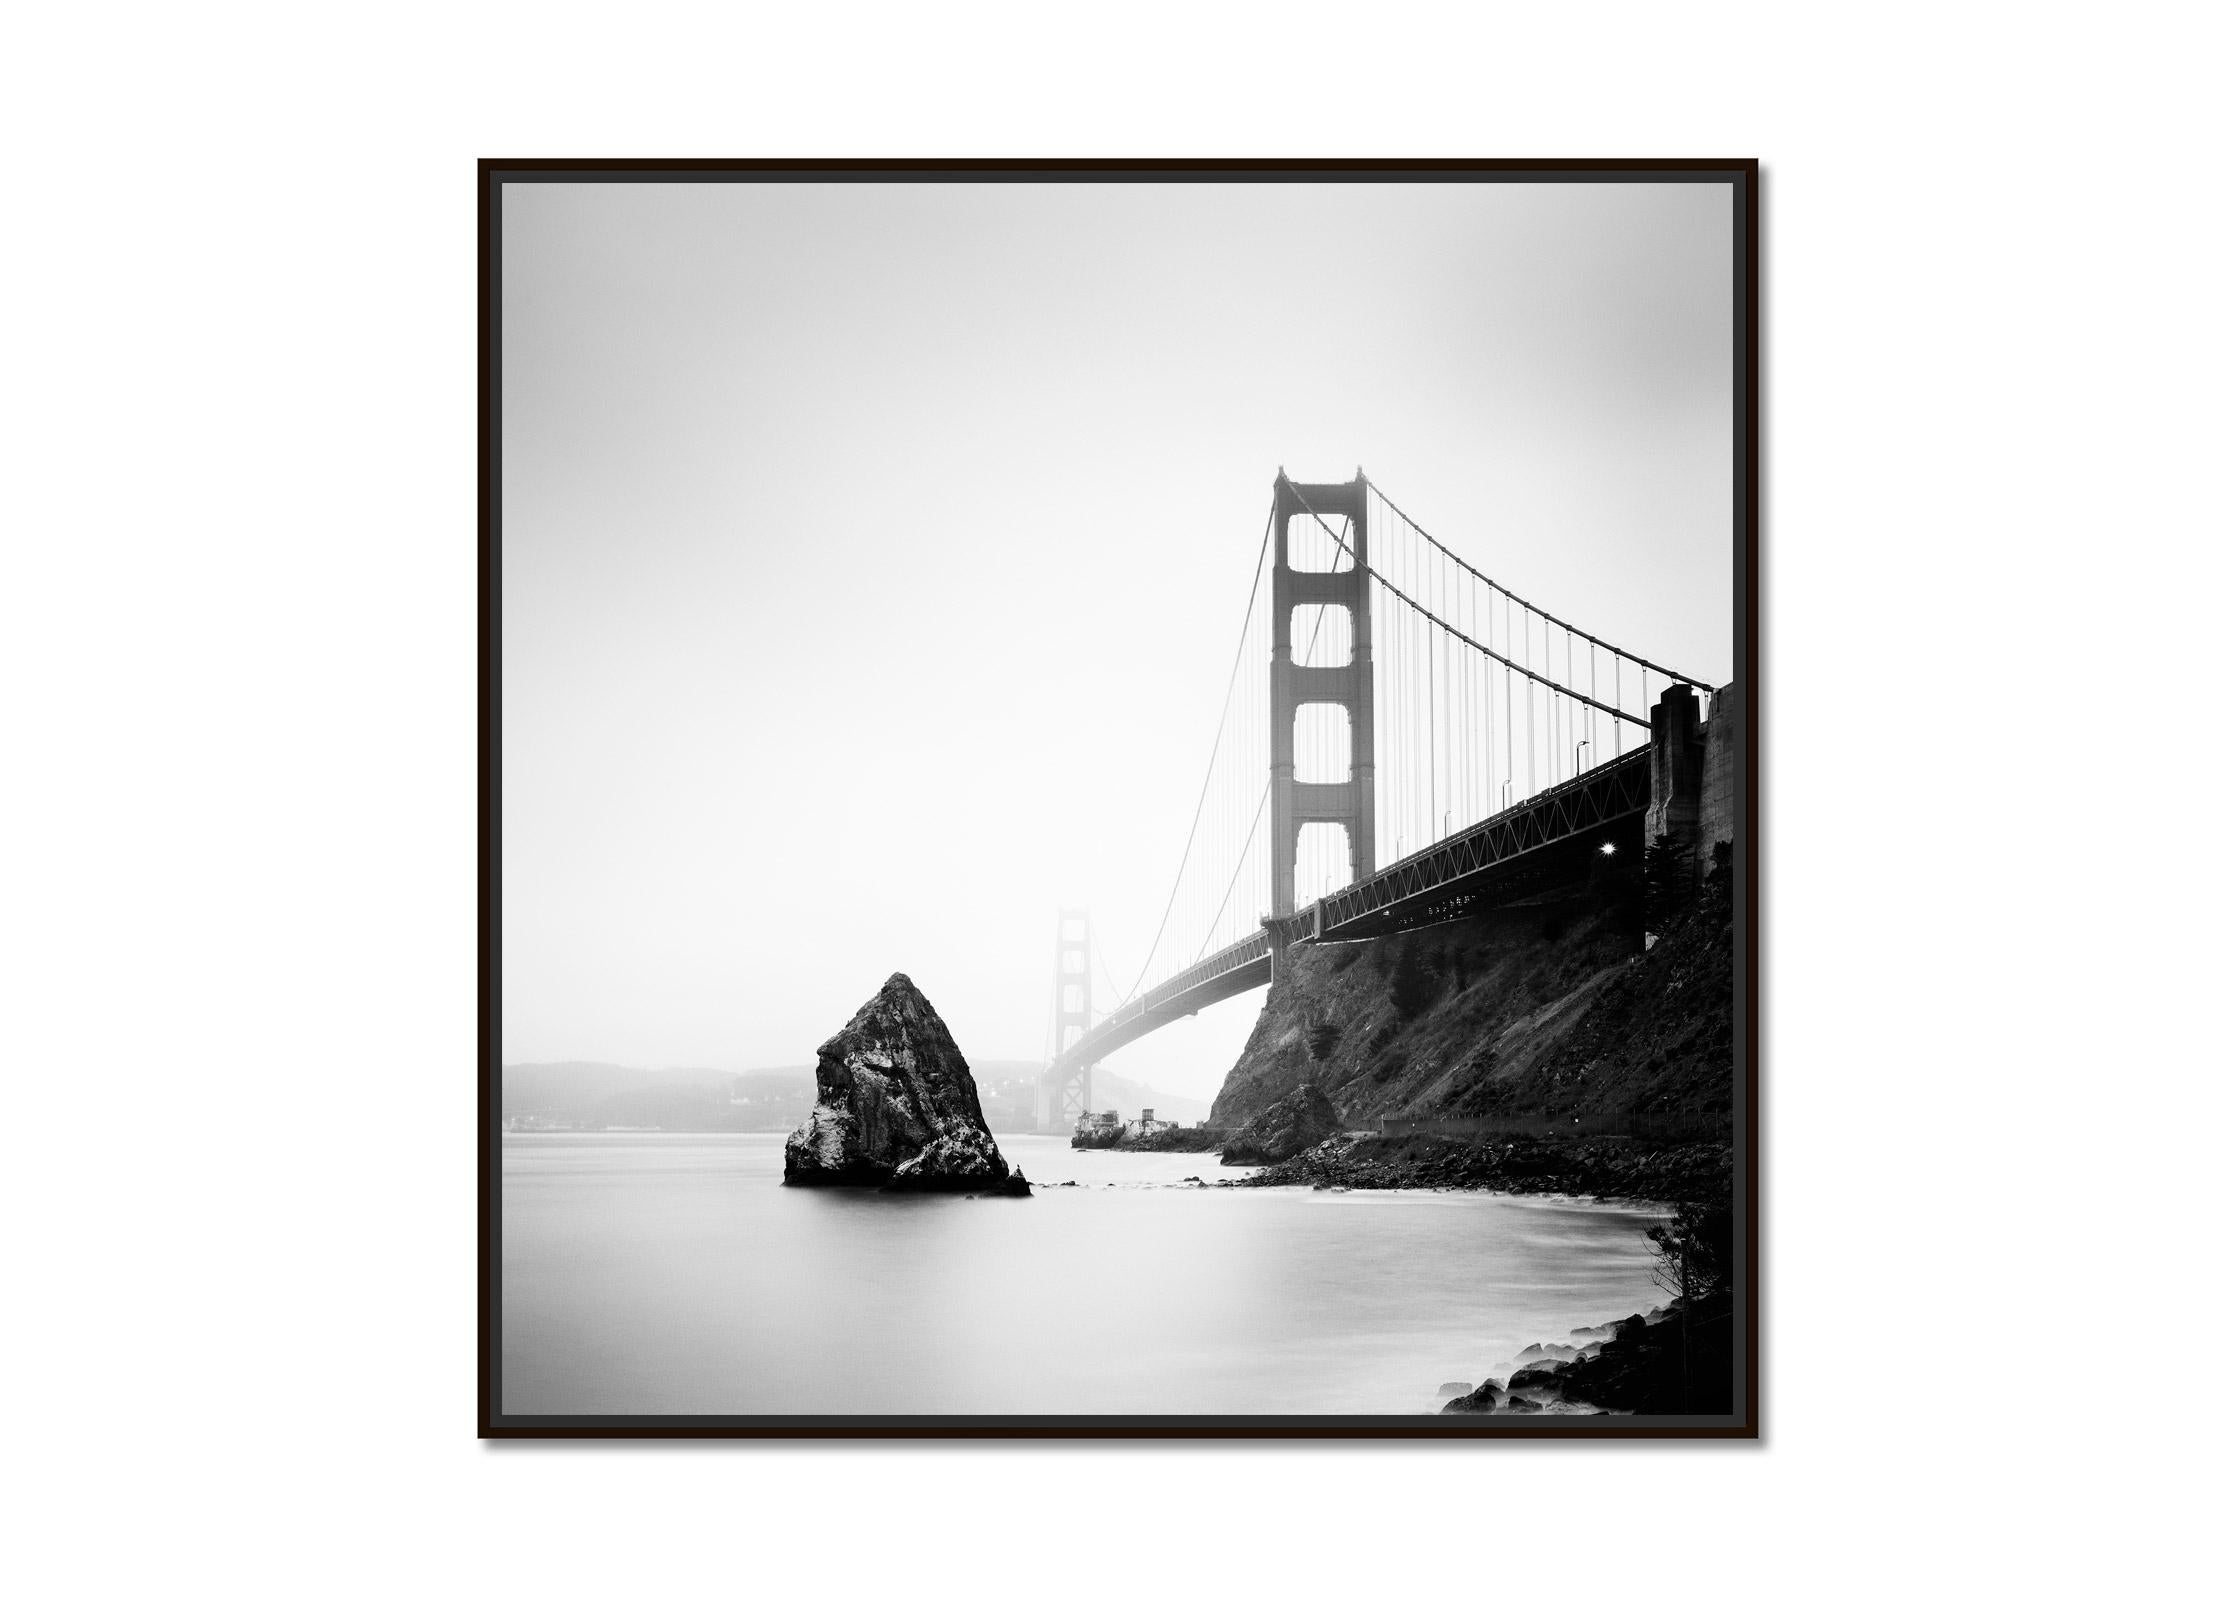 Golden Gate Bridge, fort point rock, San Francisco, b&w landscape photography - Photograph by Gerald Berghammer